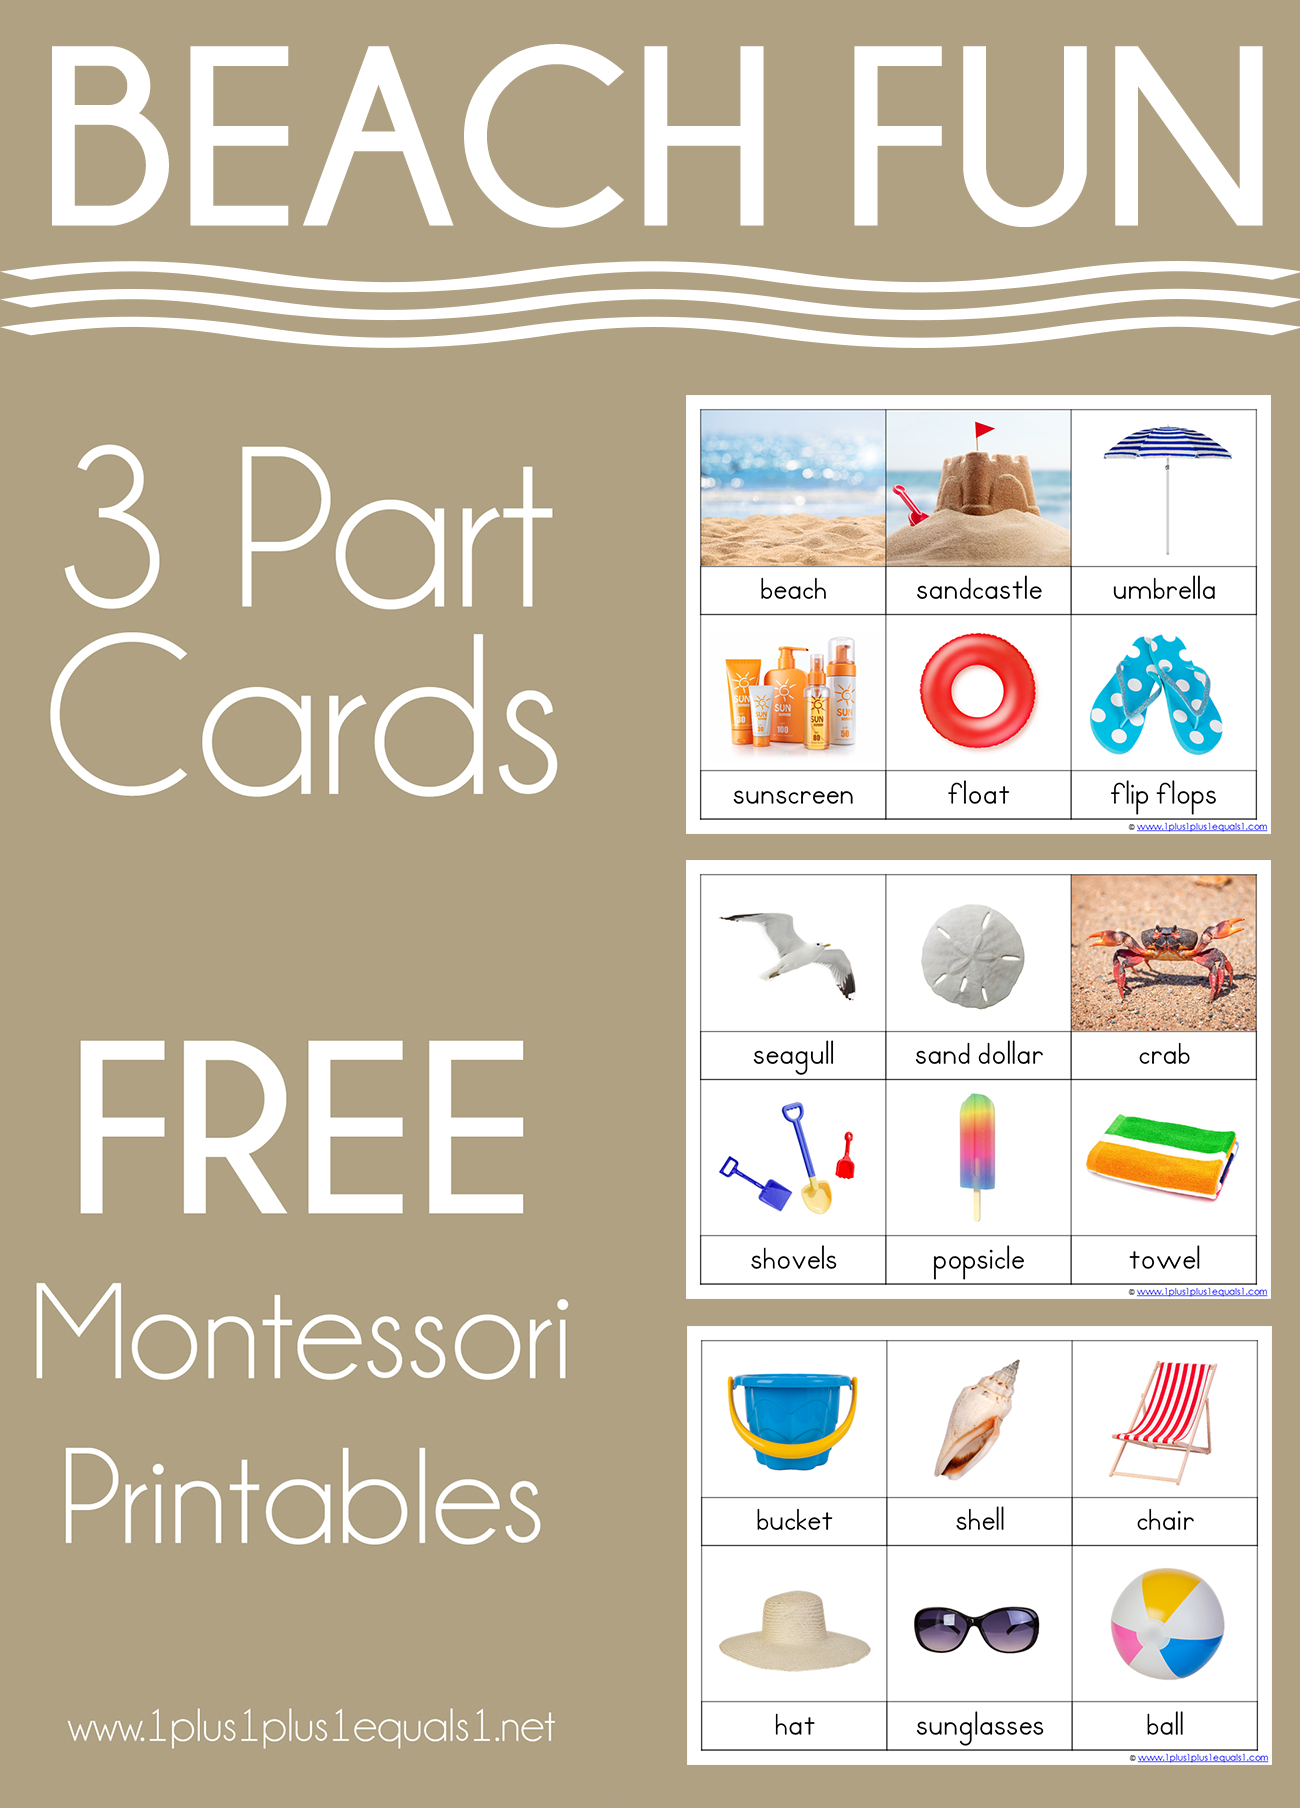 Beach Montessori Printables - Free 3 Part Cards - 1+1+1=1 throughout Free Montessori Printables